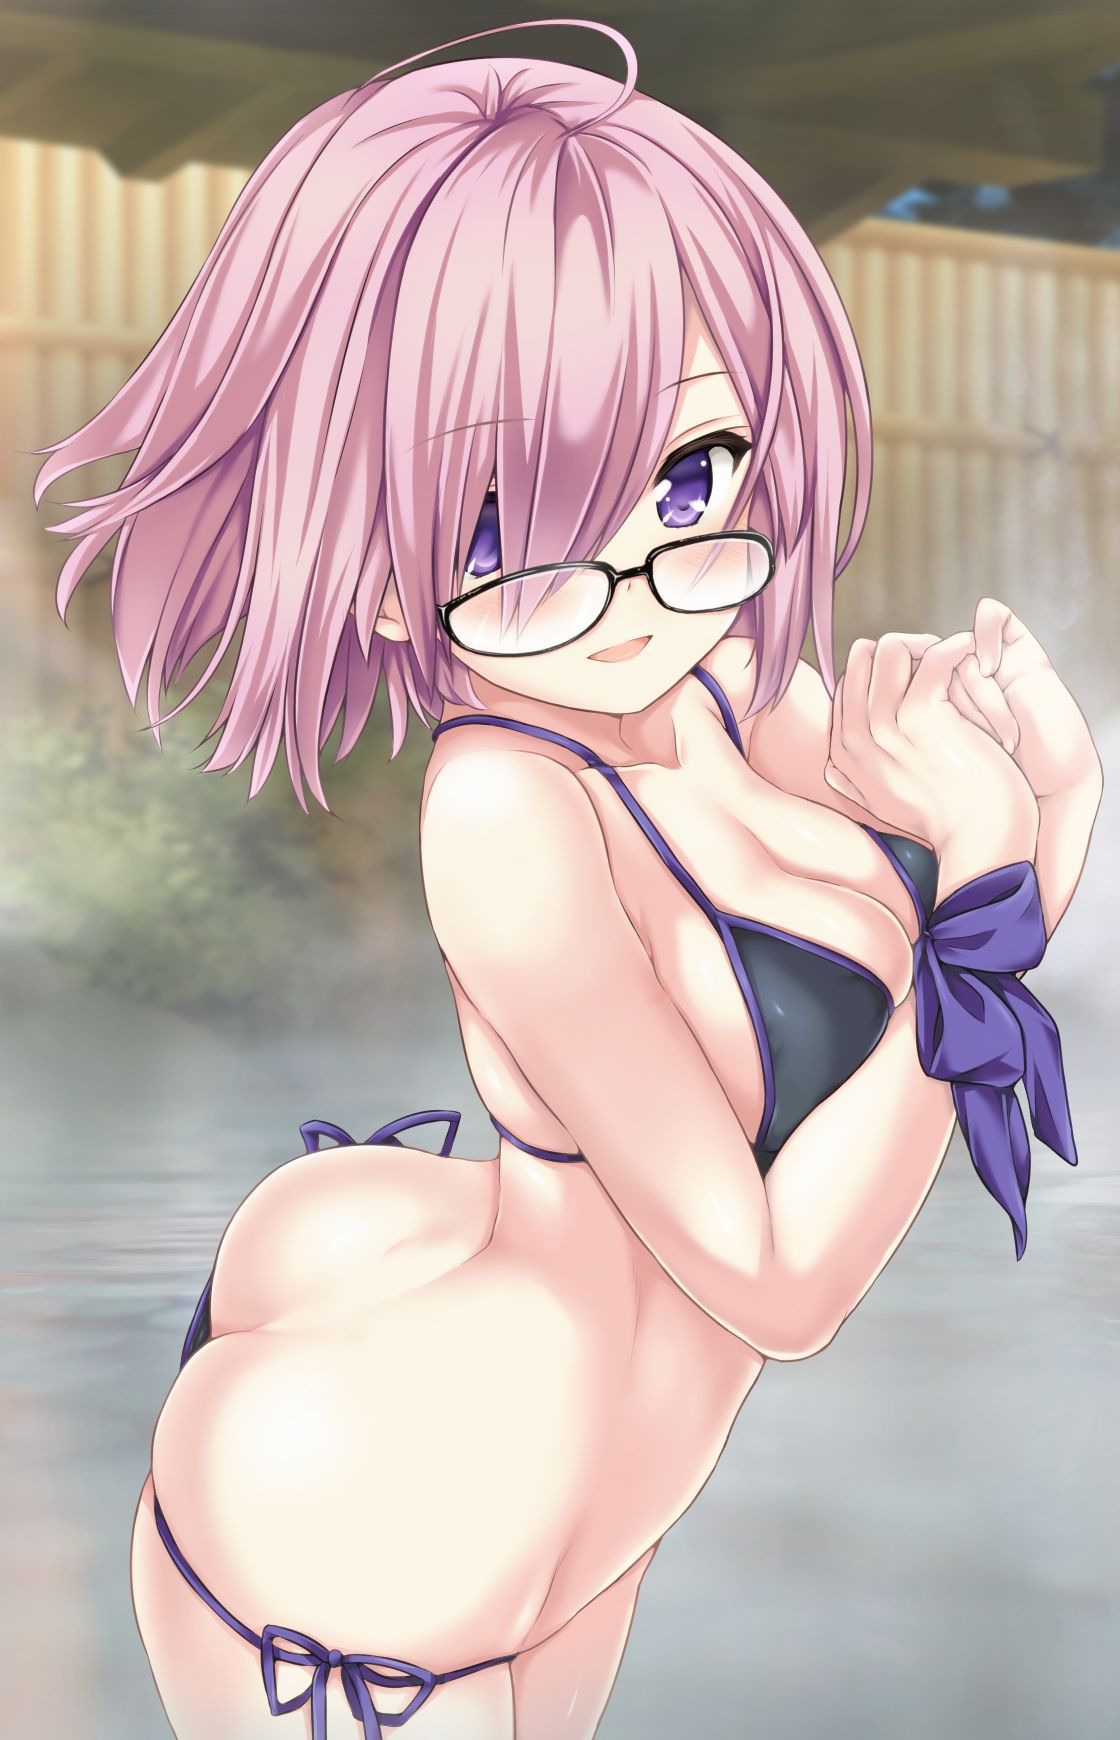 [the second, ZIP] please give me the beautiful girl image of the low leg underwear bikini! 50